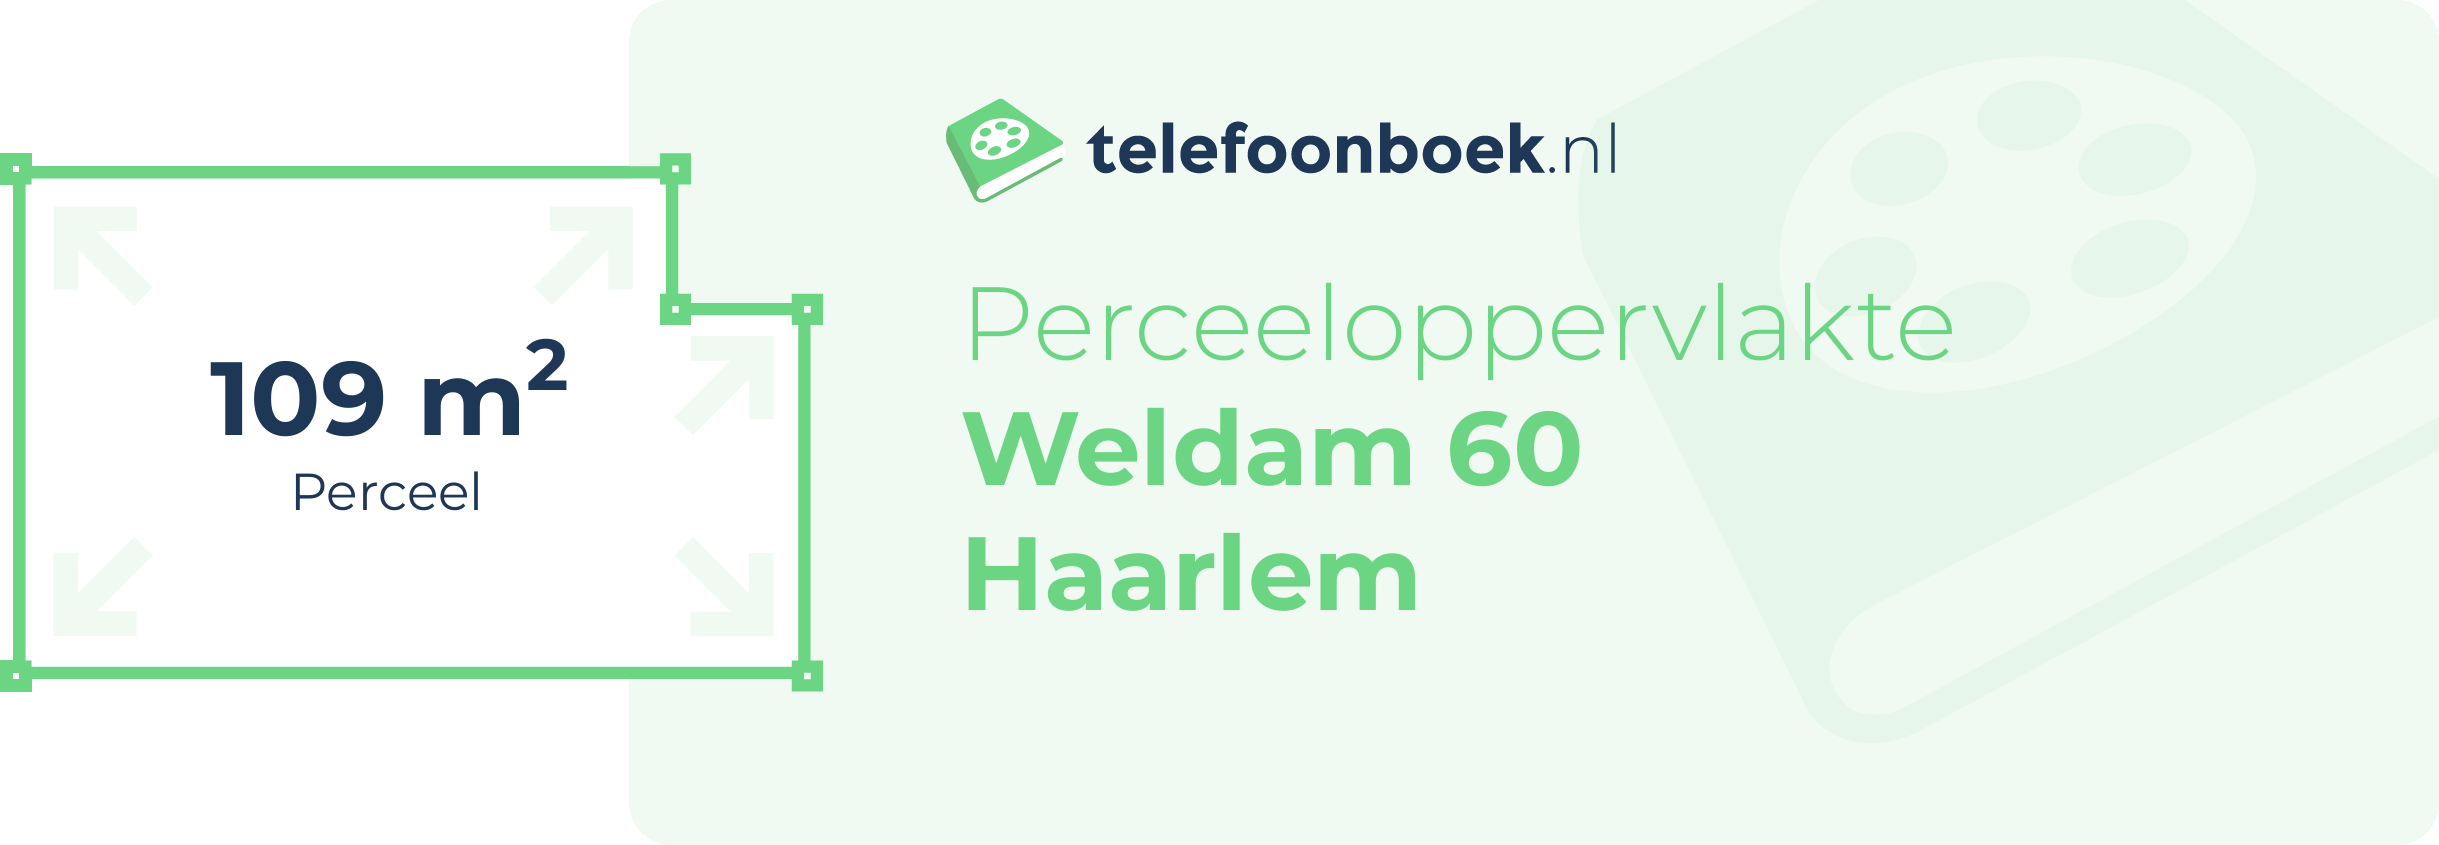 Perceeloppervlakte Weldam 60 Haarlem